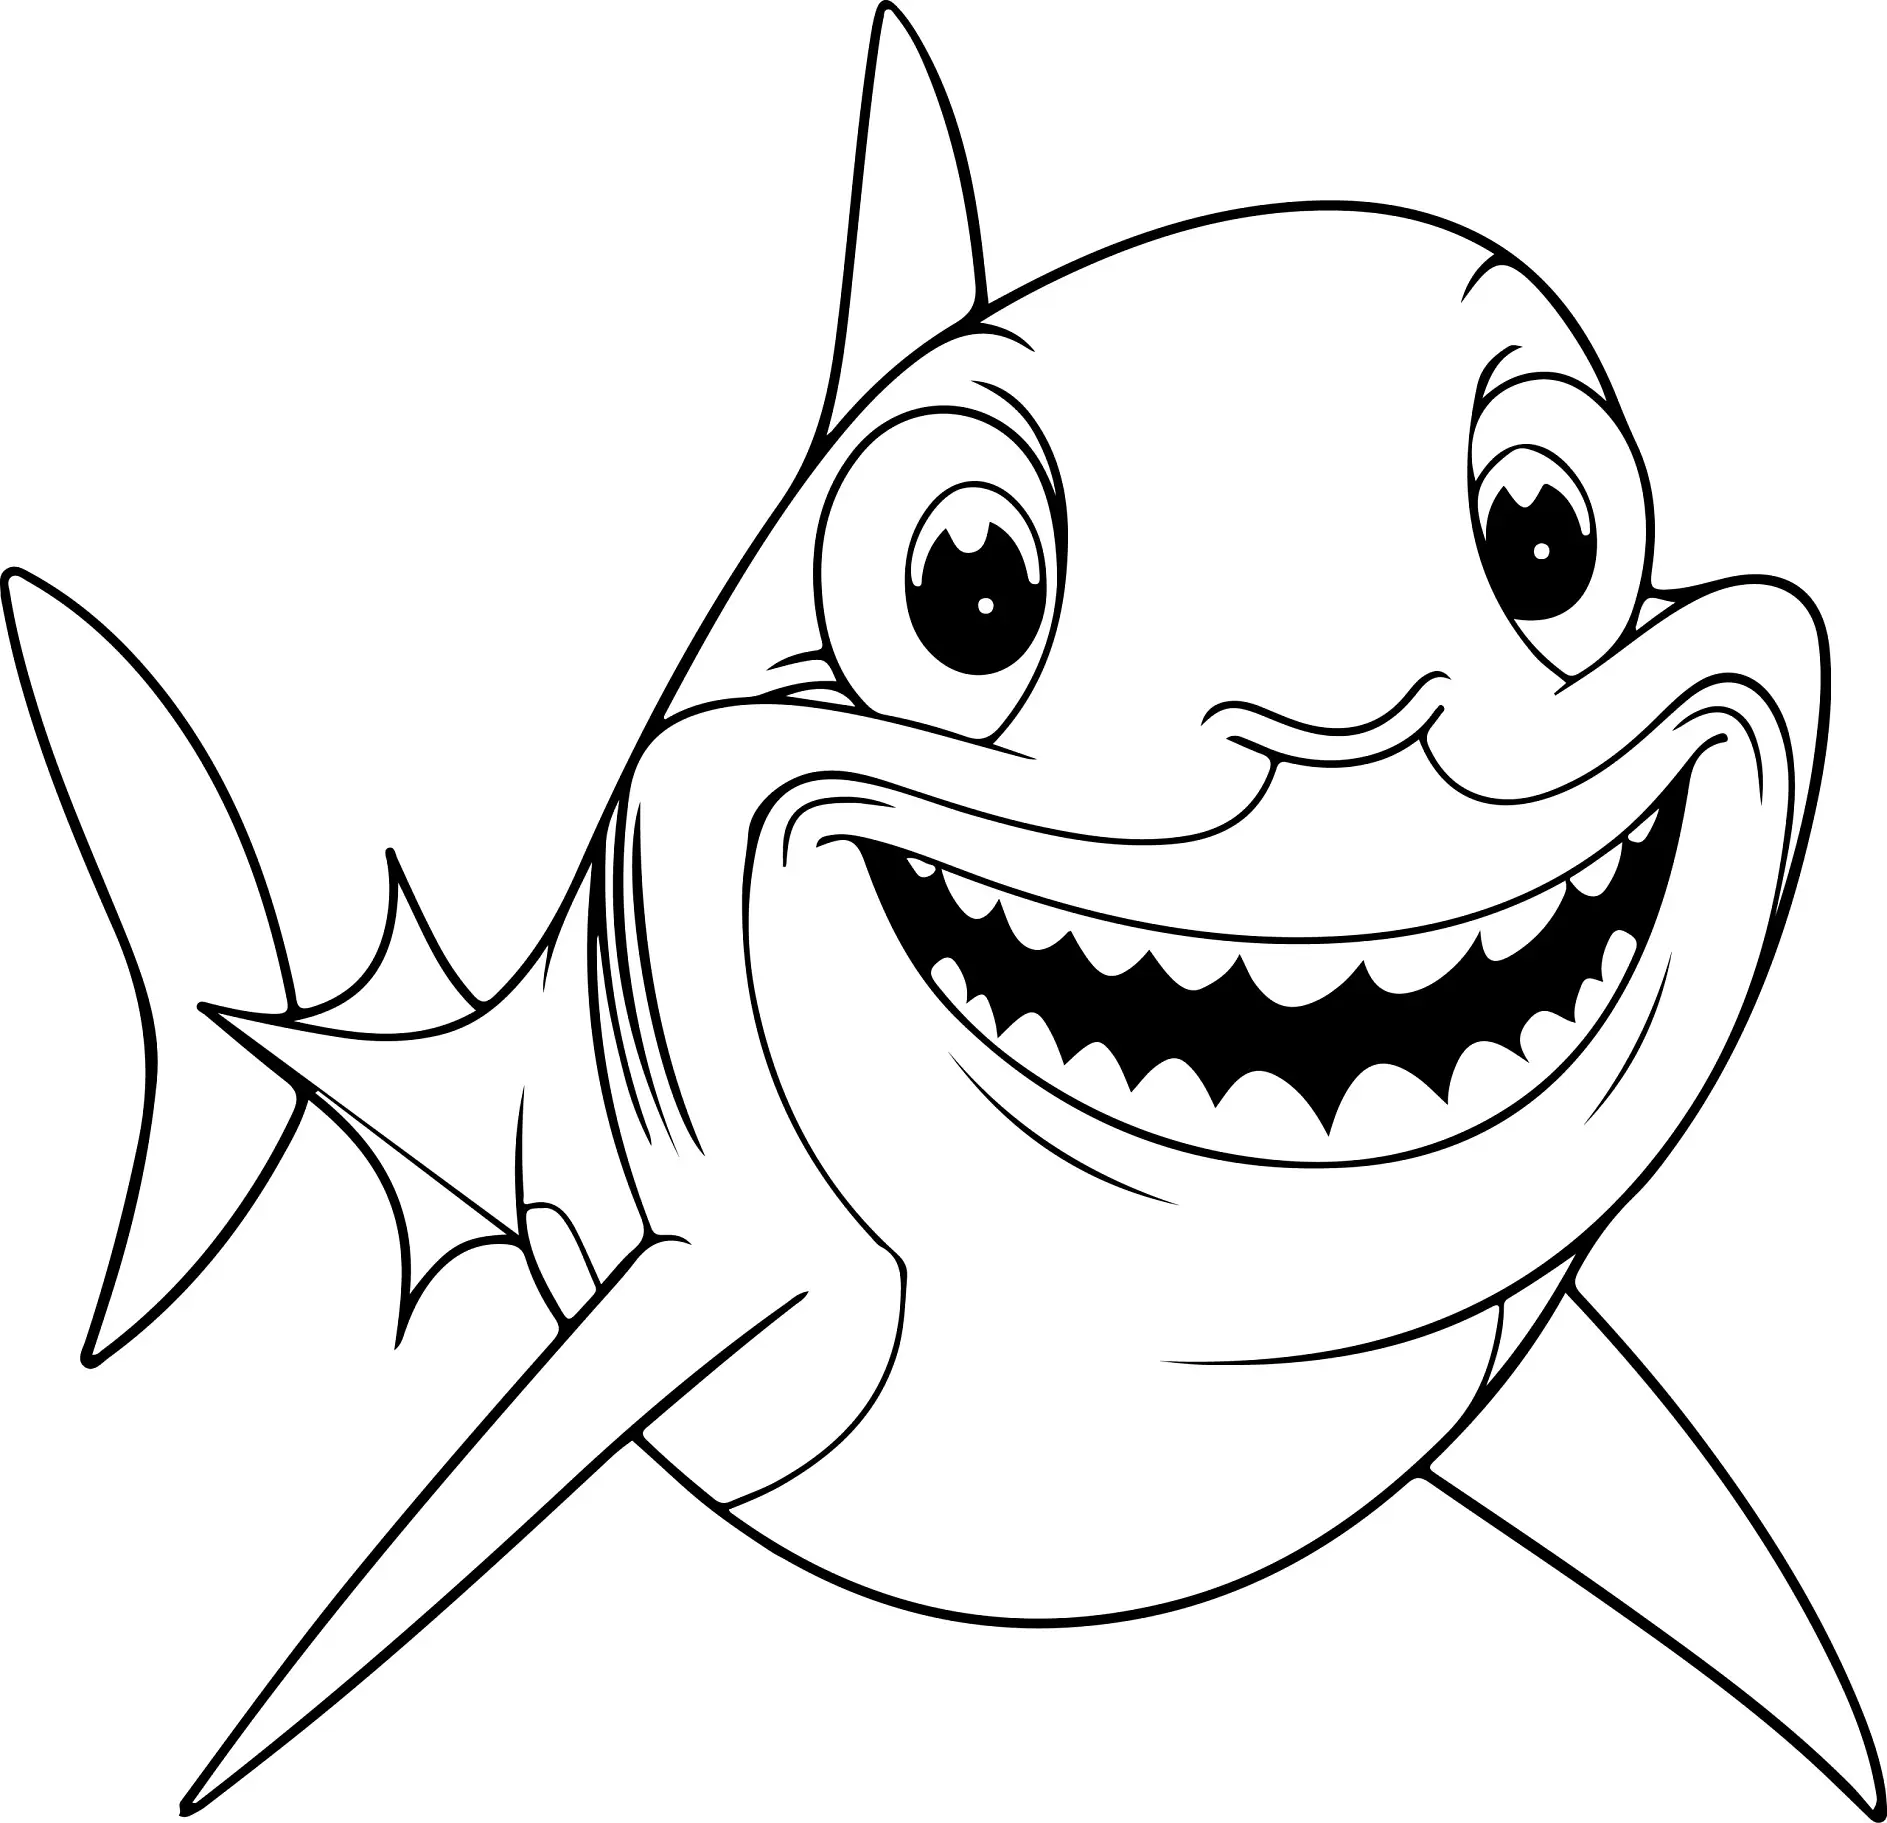 Ausmalbild Hai mit breitem Lächeln